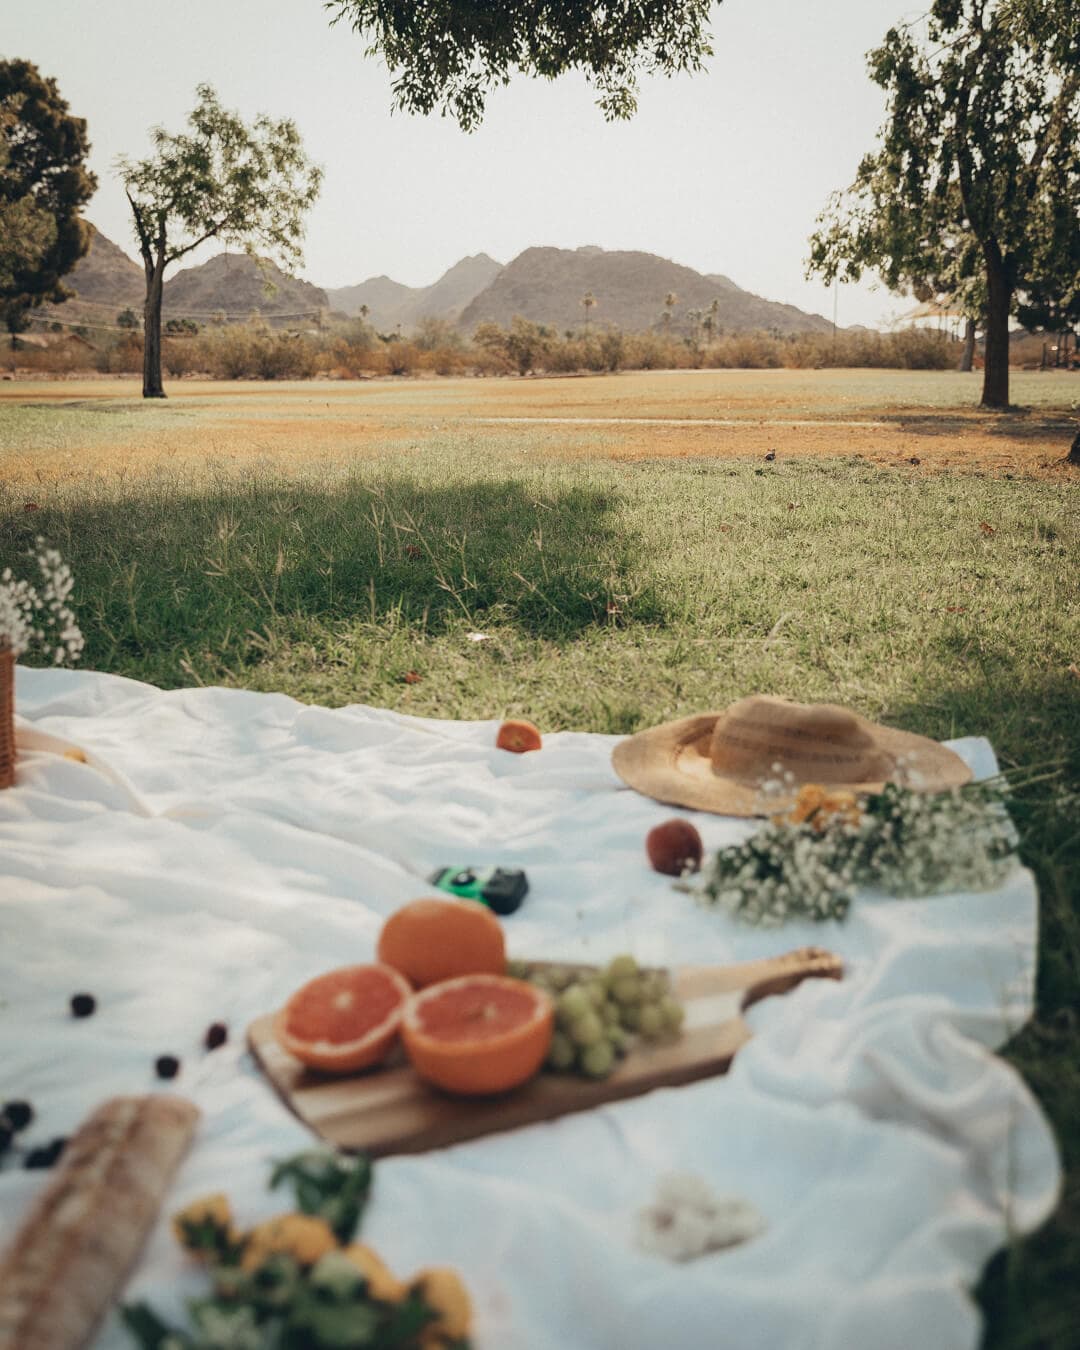 view of a picnic at granada park in phoenix arizona